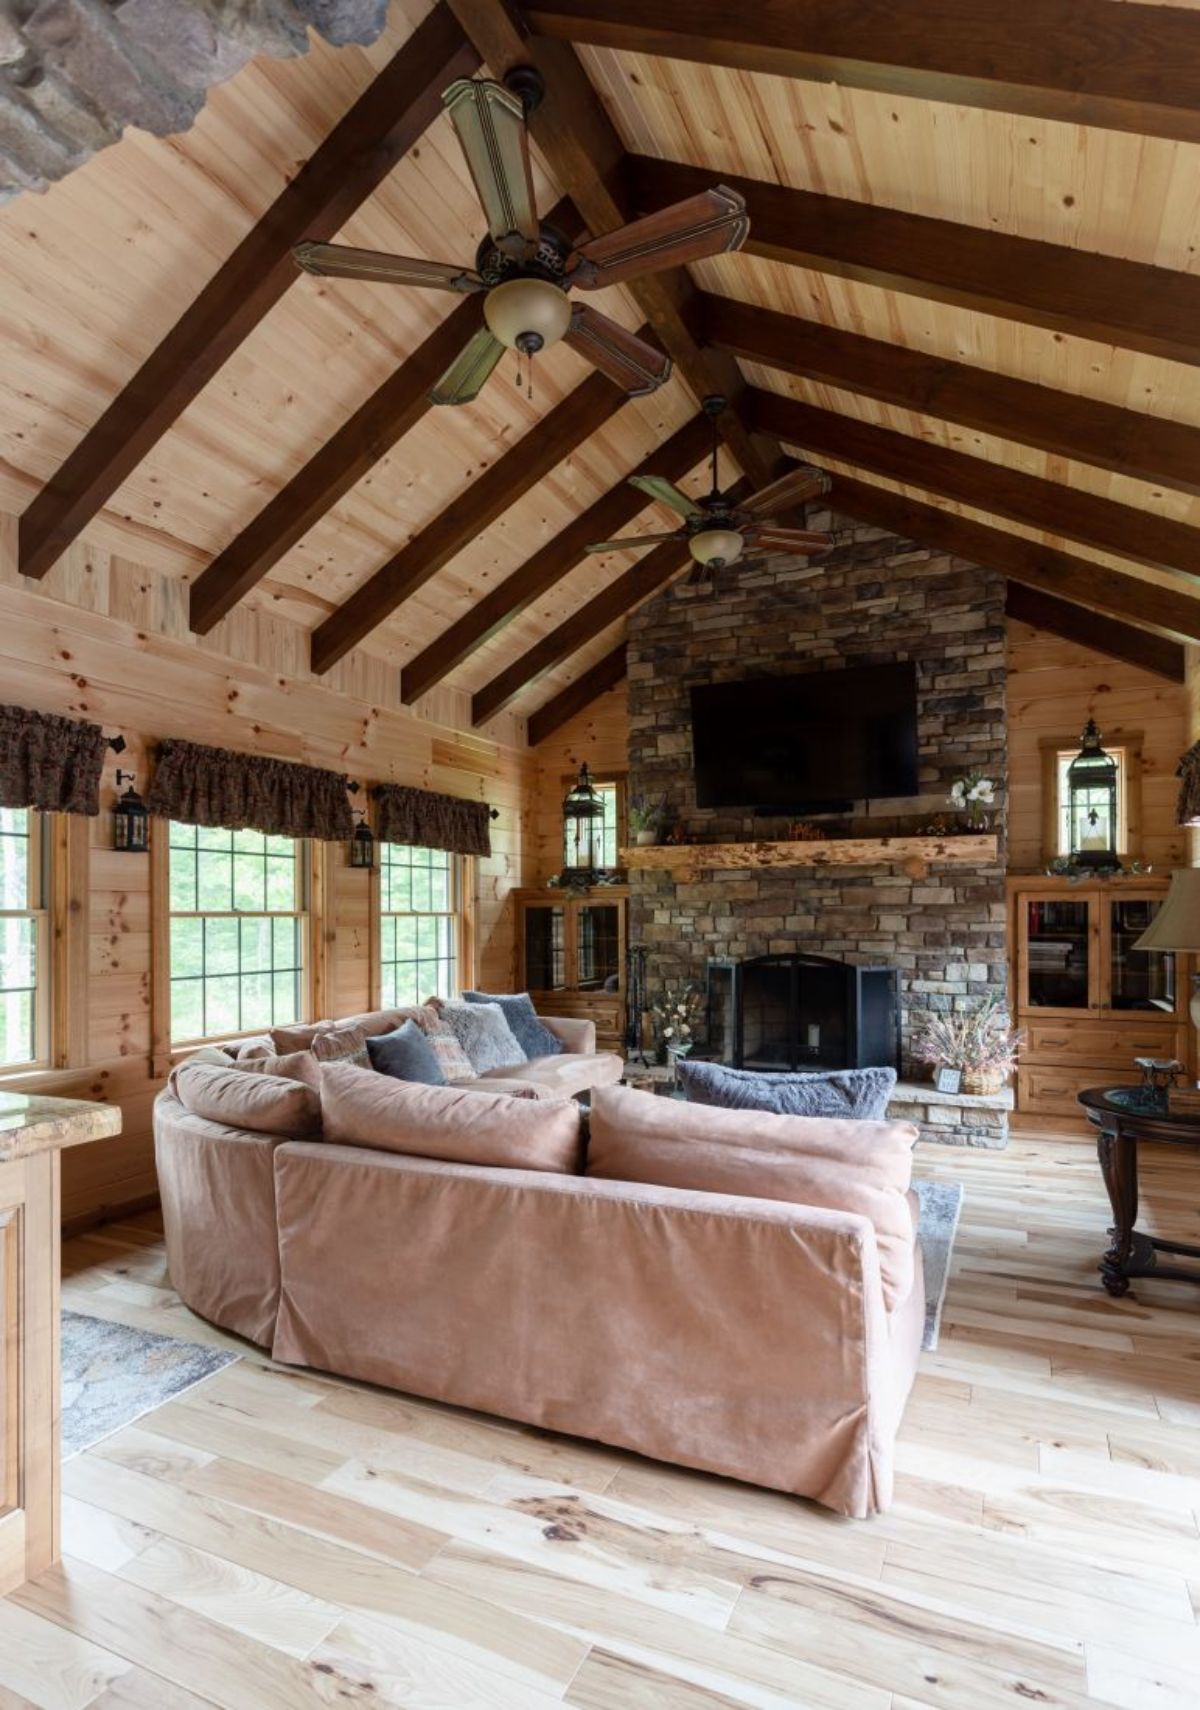 ivory sofa inside log cabin living room with dark wood exposed beams in ceiling